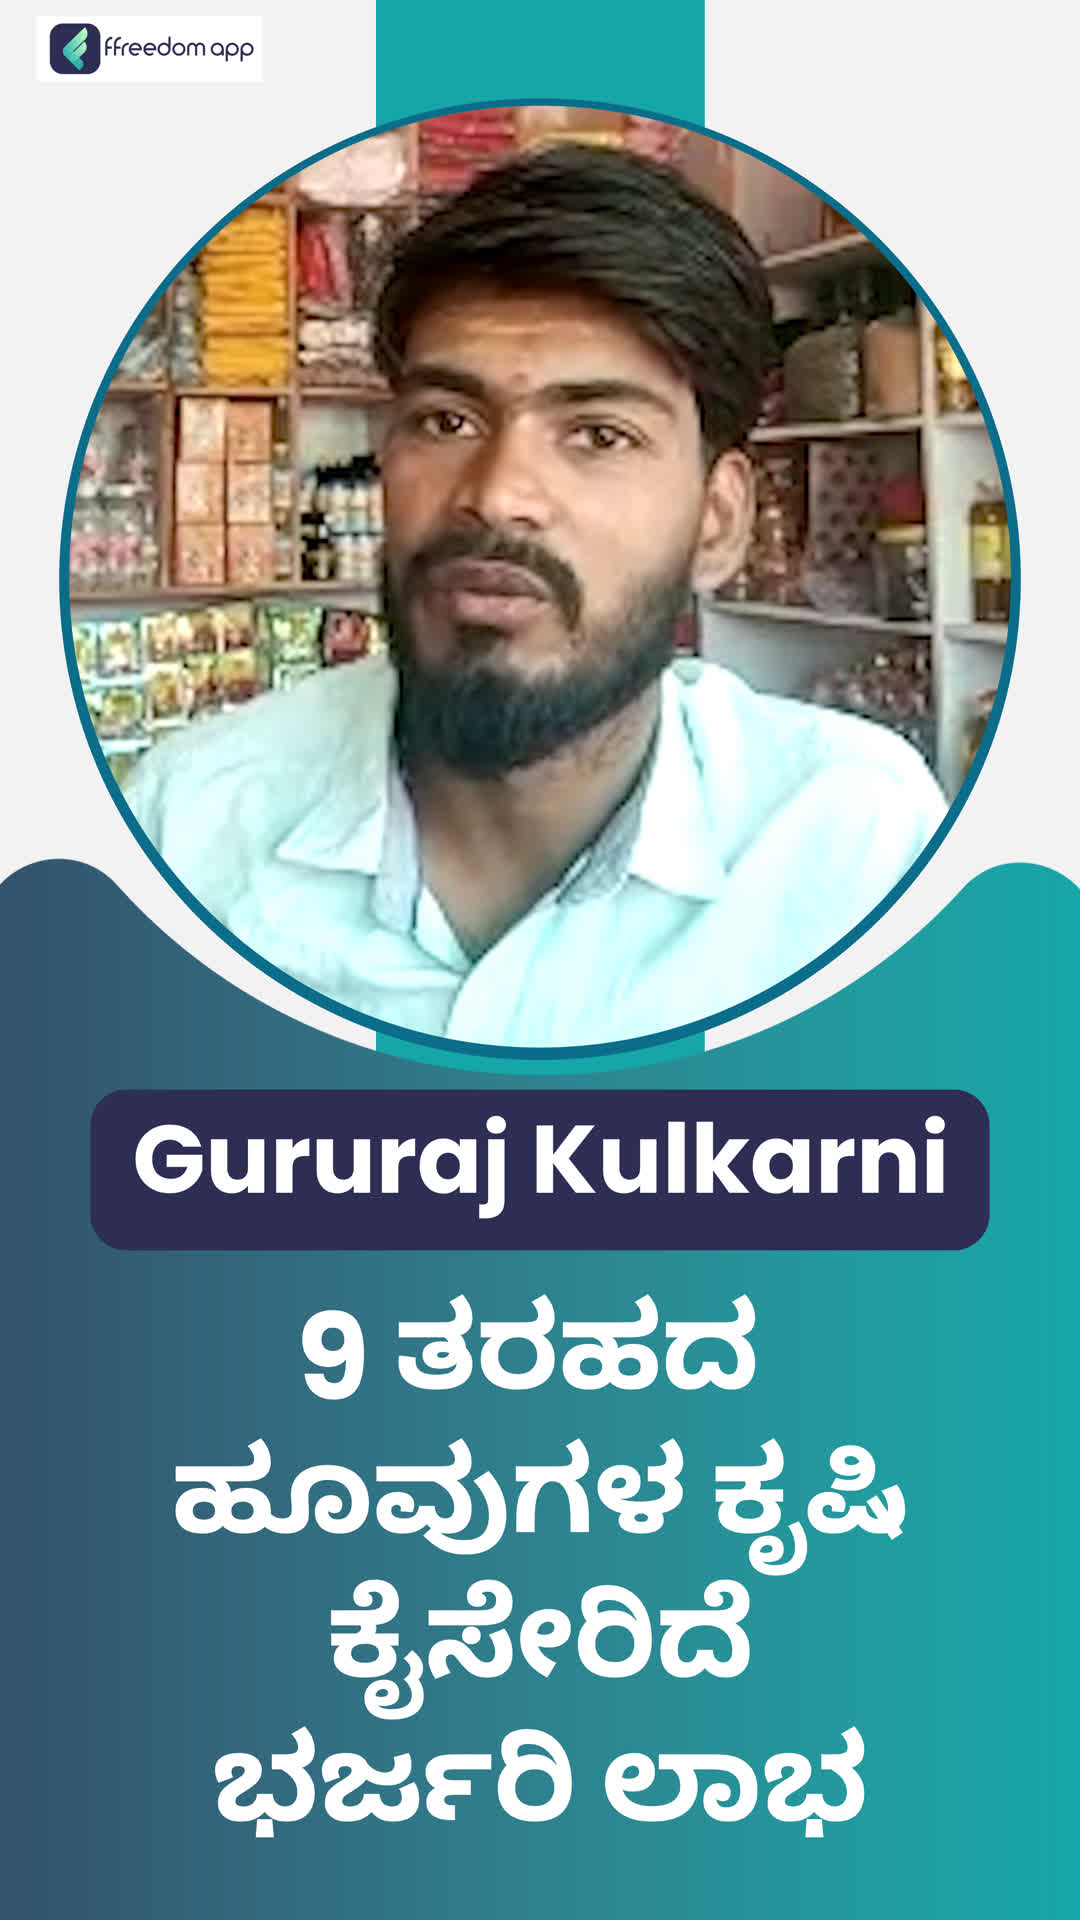 Gururaj's Honest Review of ffreedom app - Vijayapura ,Karnataka